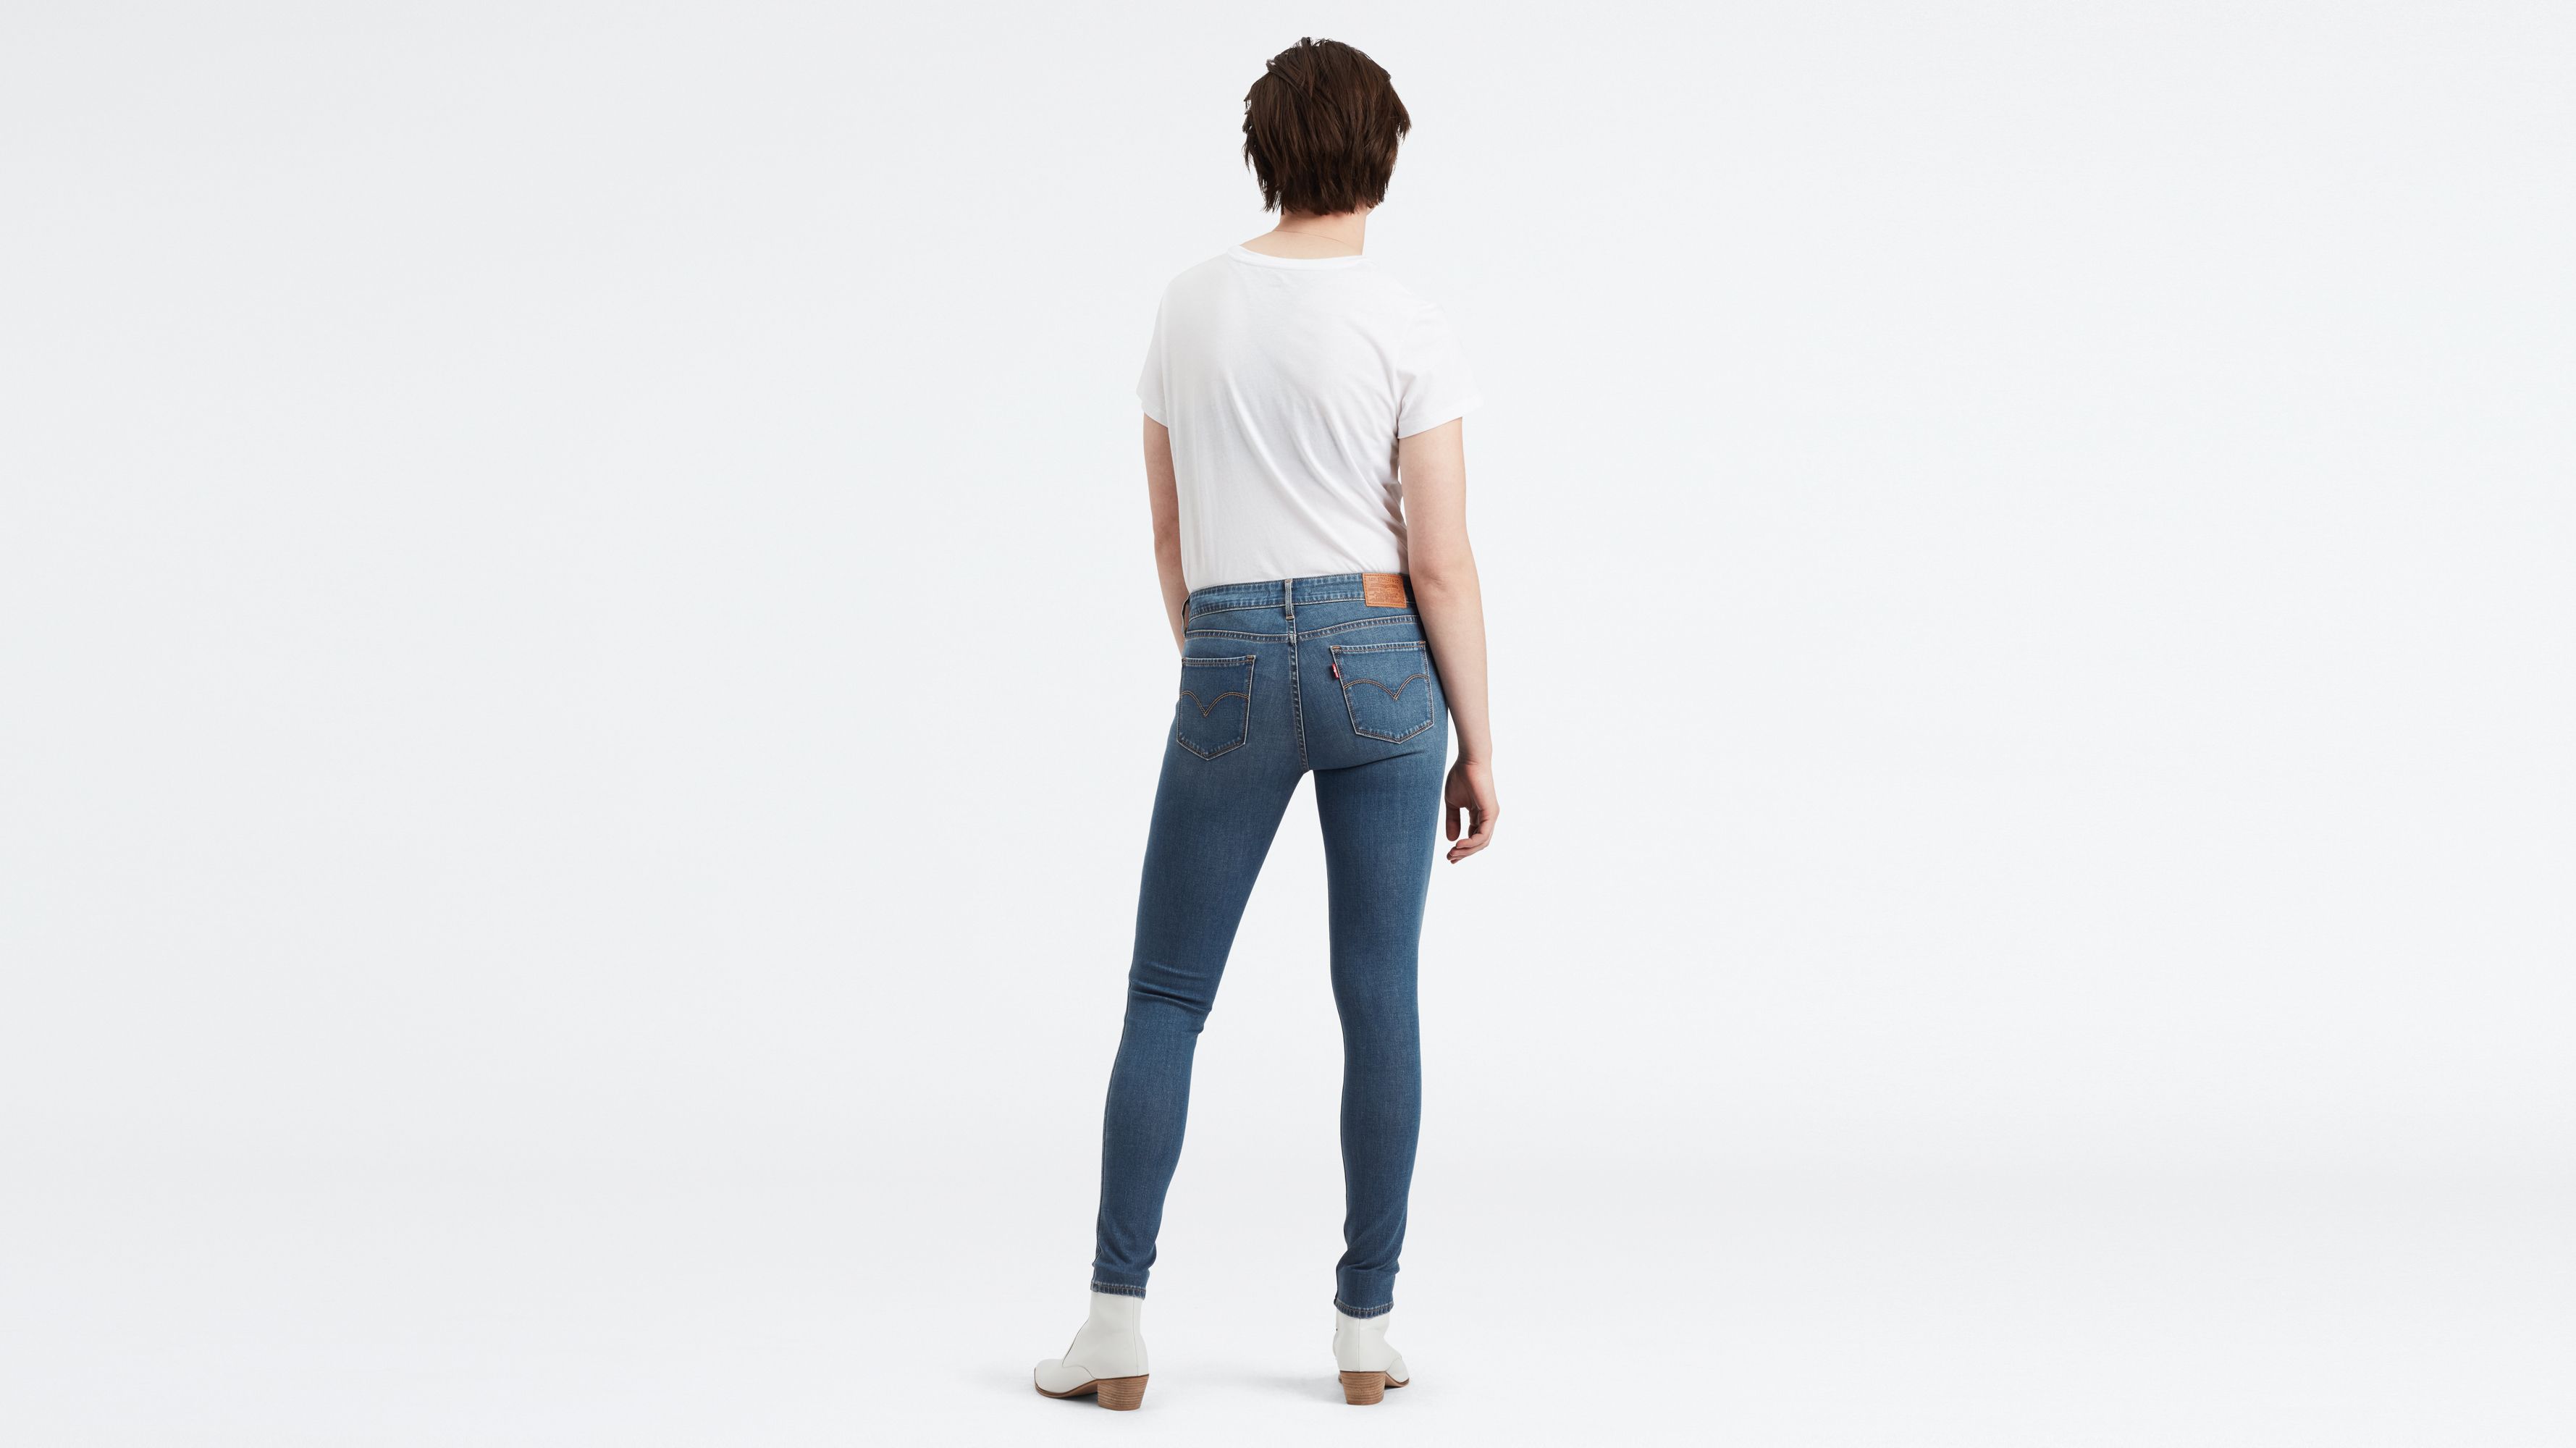 levi's 711 skinny jeans